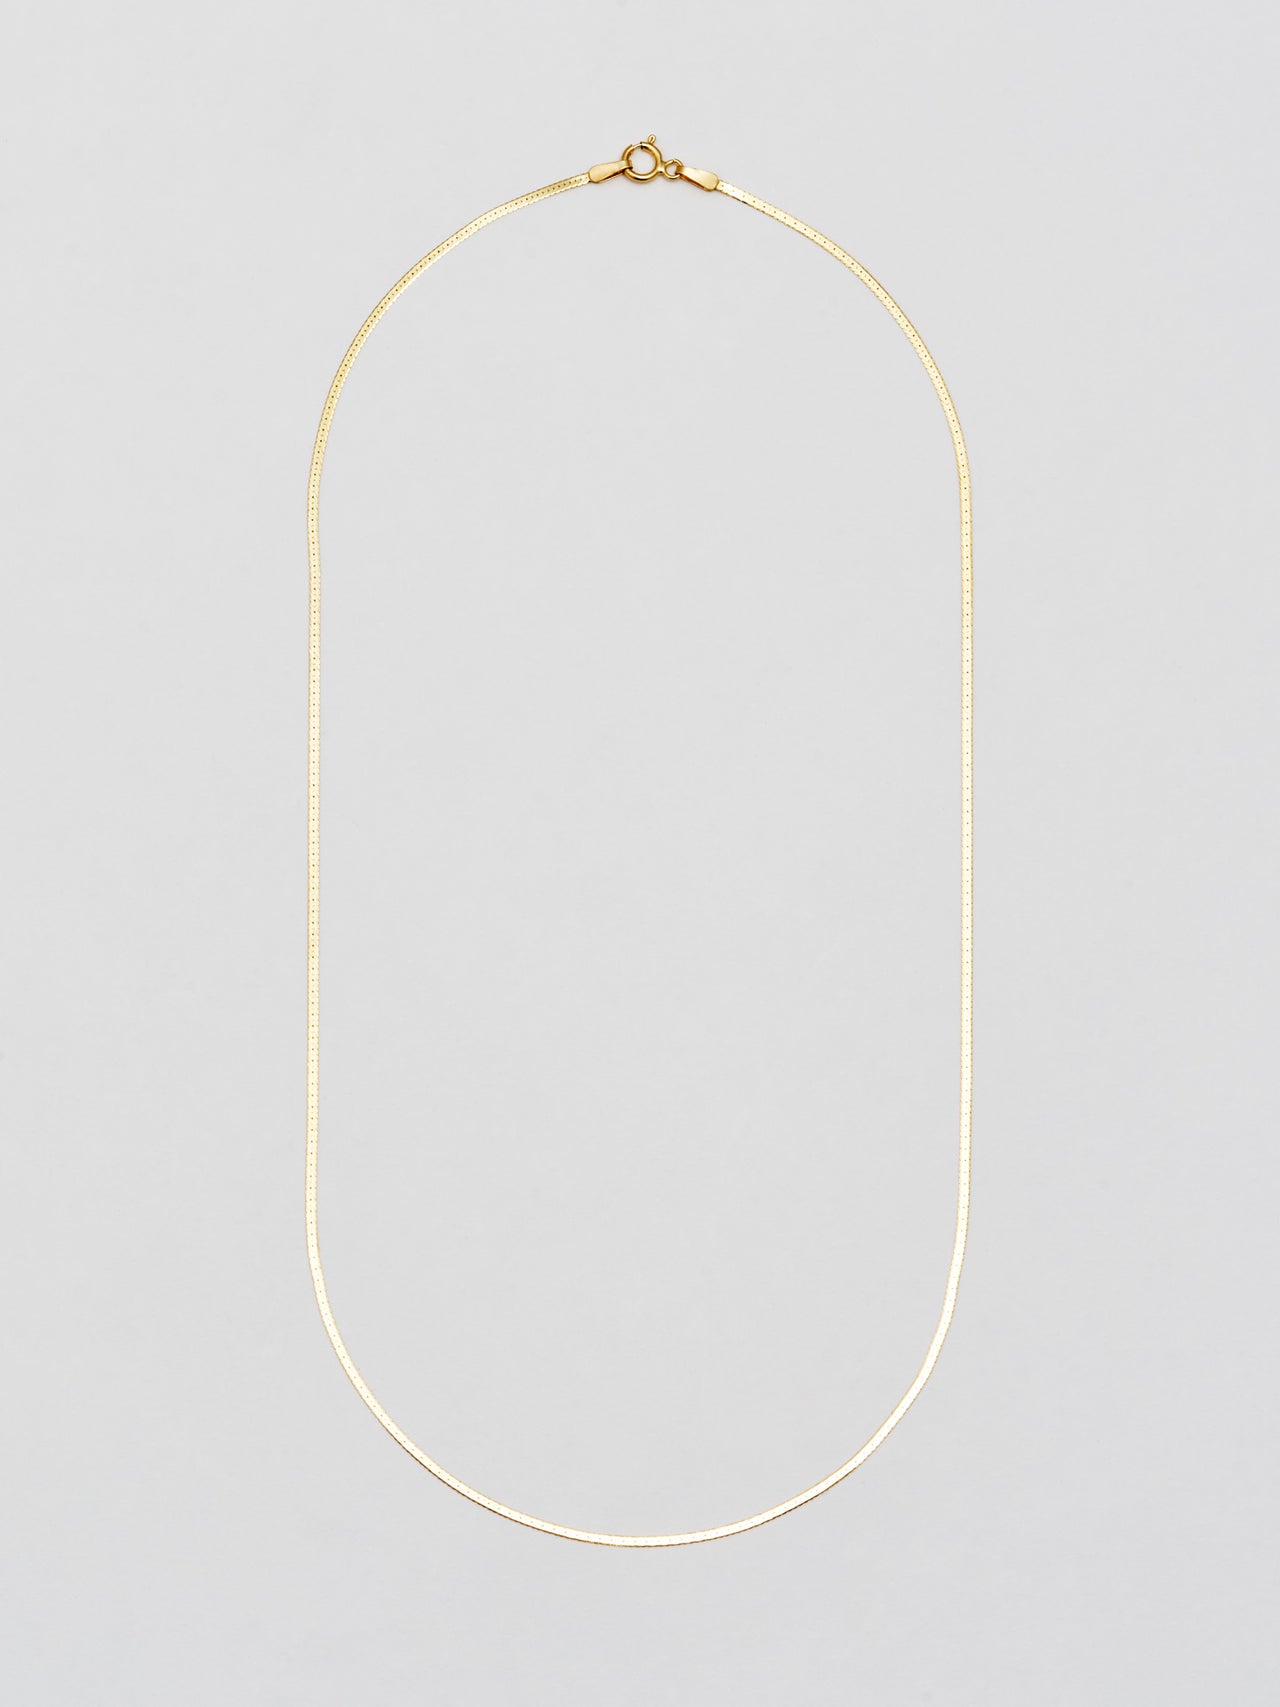 Demi Herringbone Necklace: 10Kt Yellow Gold Slender Herringbone Chain Necklace 